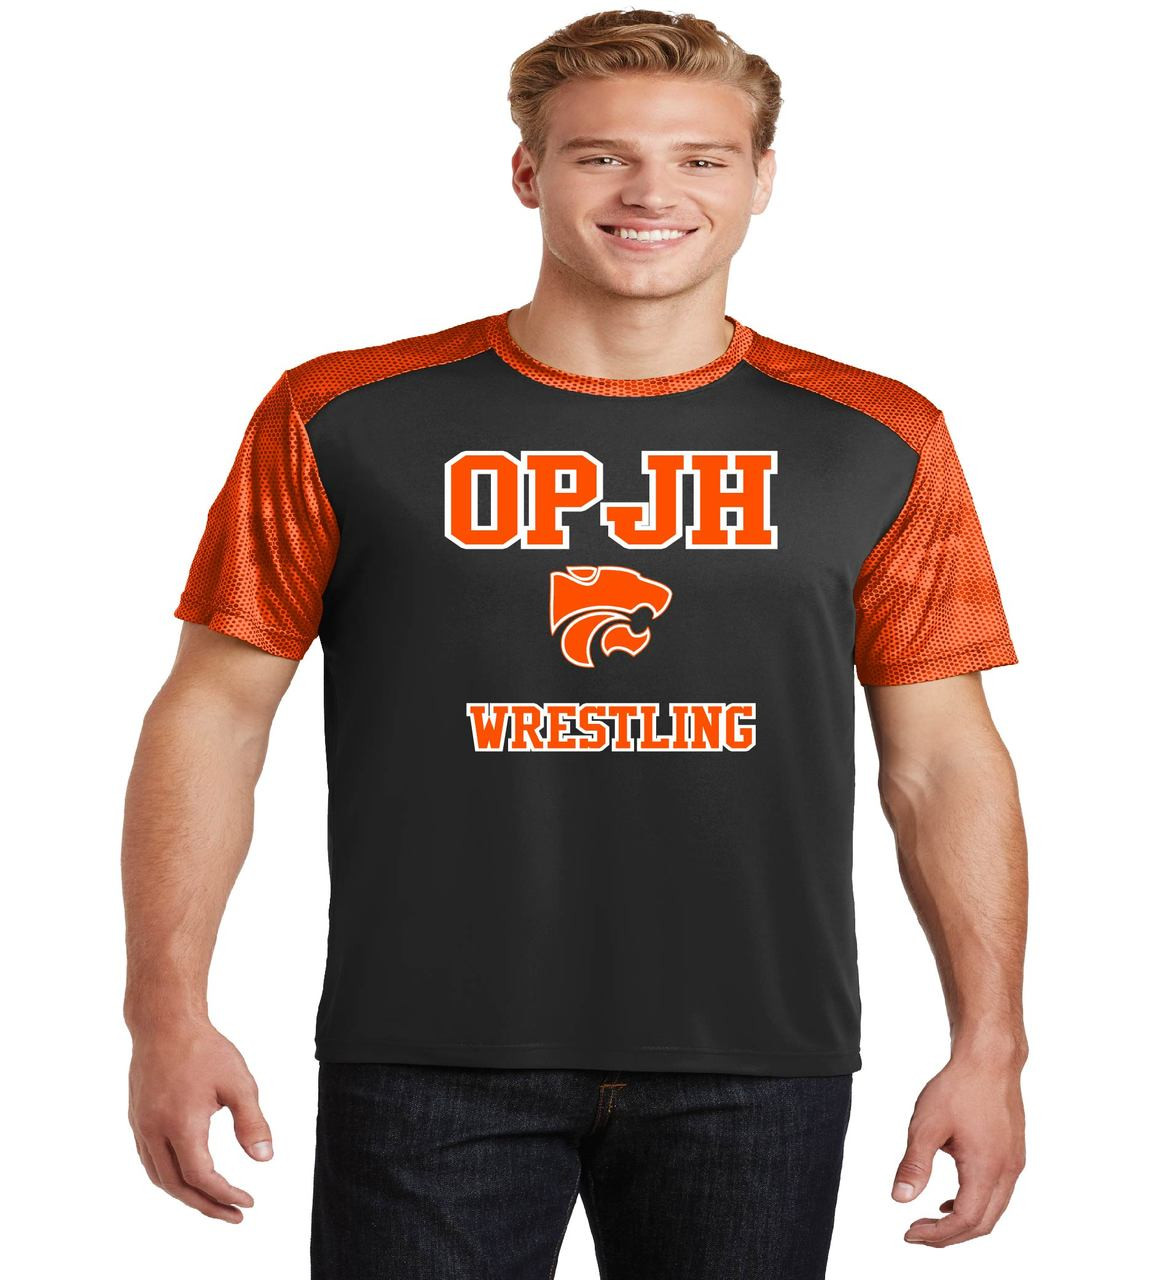 orange dri fit shirt